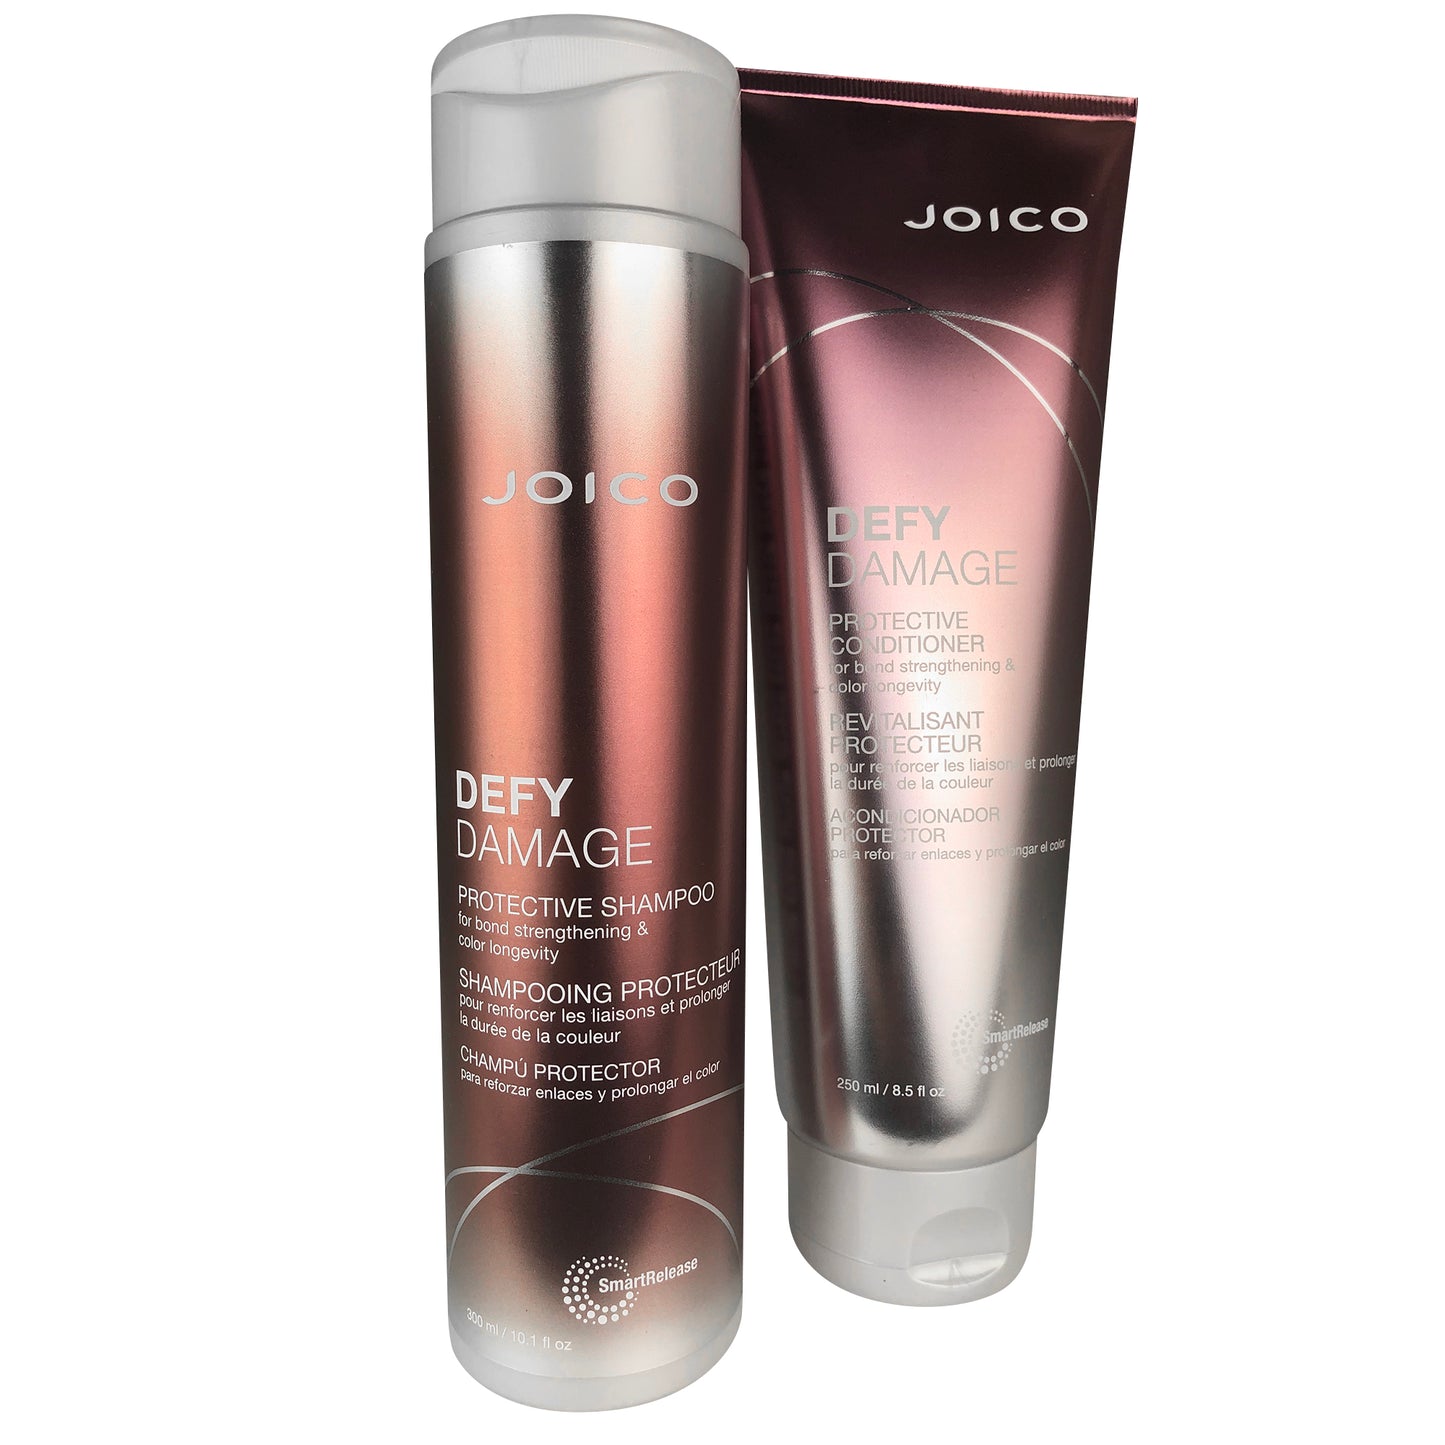 Joico Defy Damage 4 piece Set of Protective Shampoo 10.1 oz Conditioner 8.5 oz UV Protective Shield 1.7 oz Protective Hair Mask 1.7 oz for Color Longevity